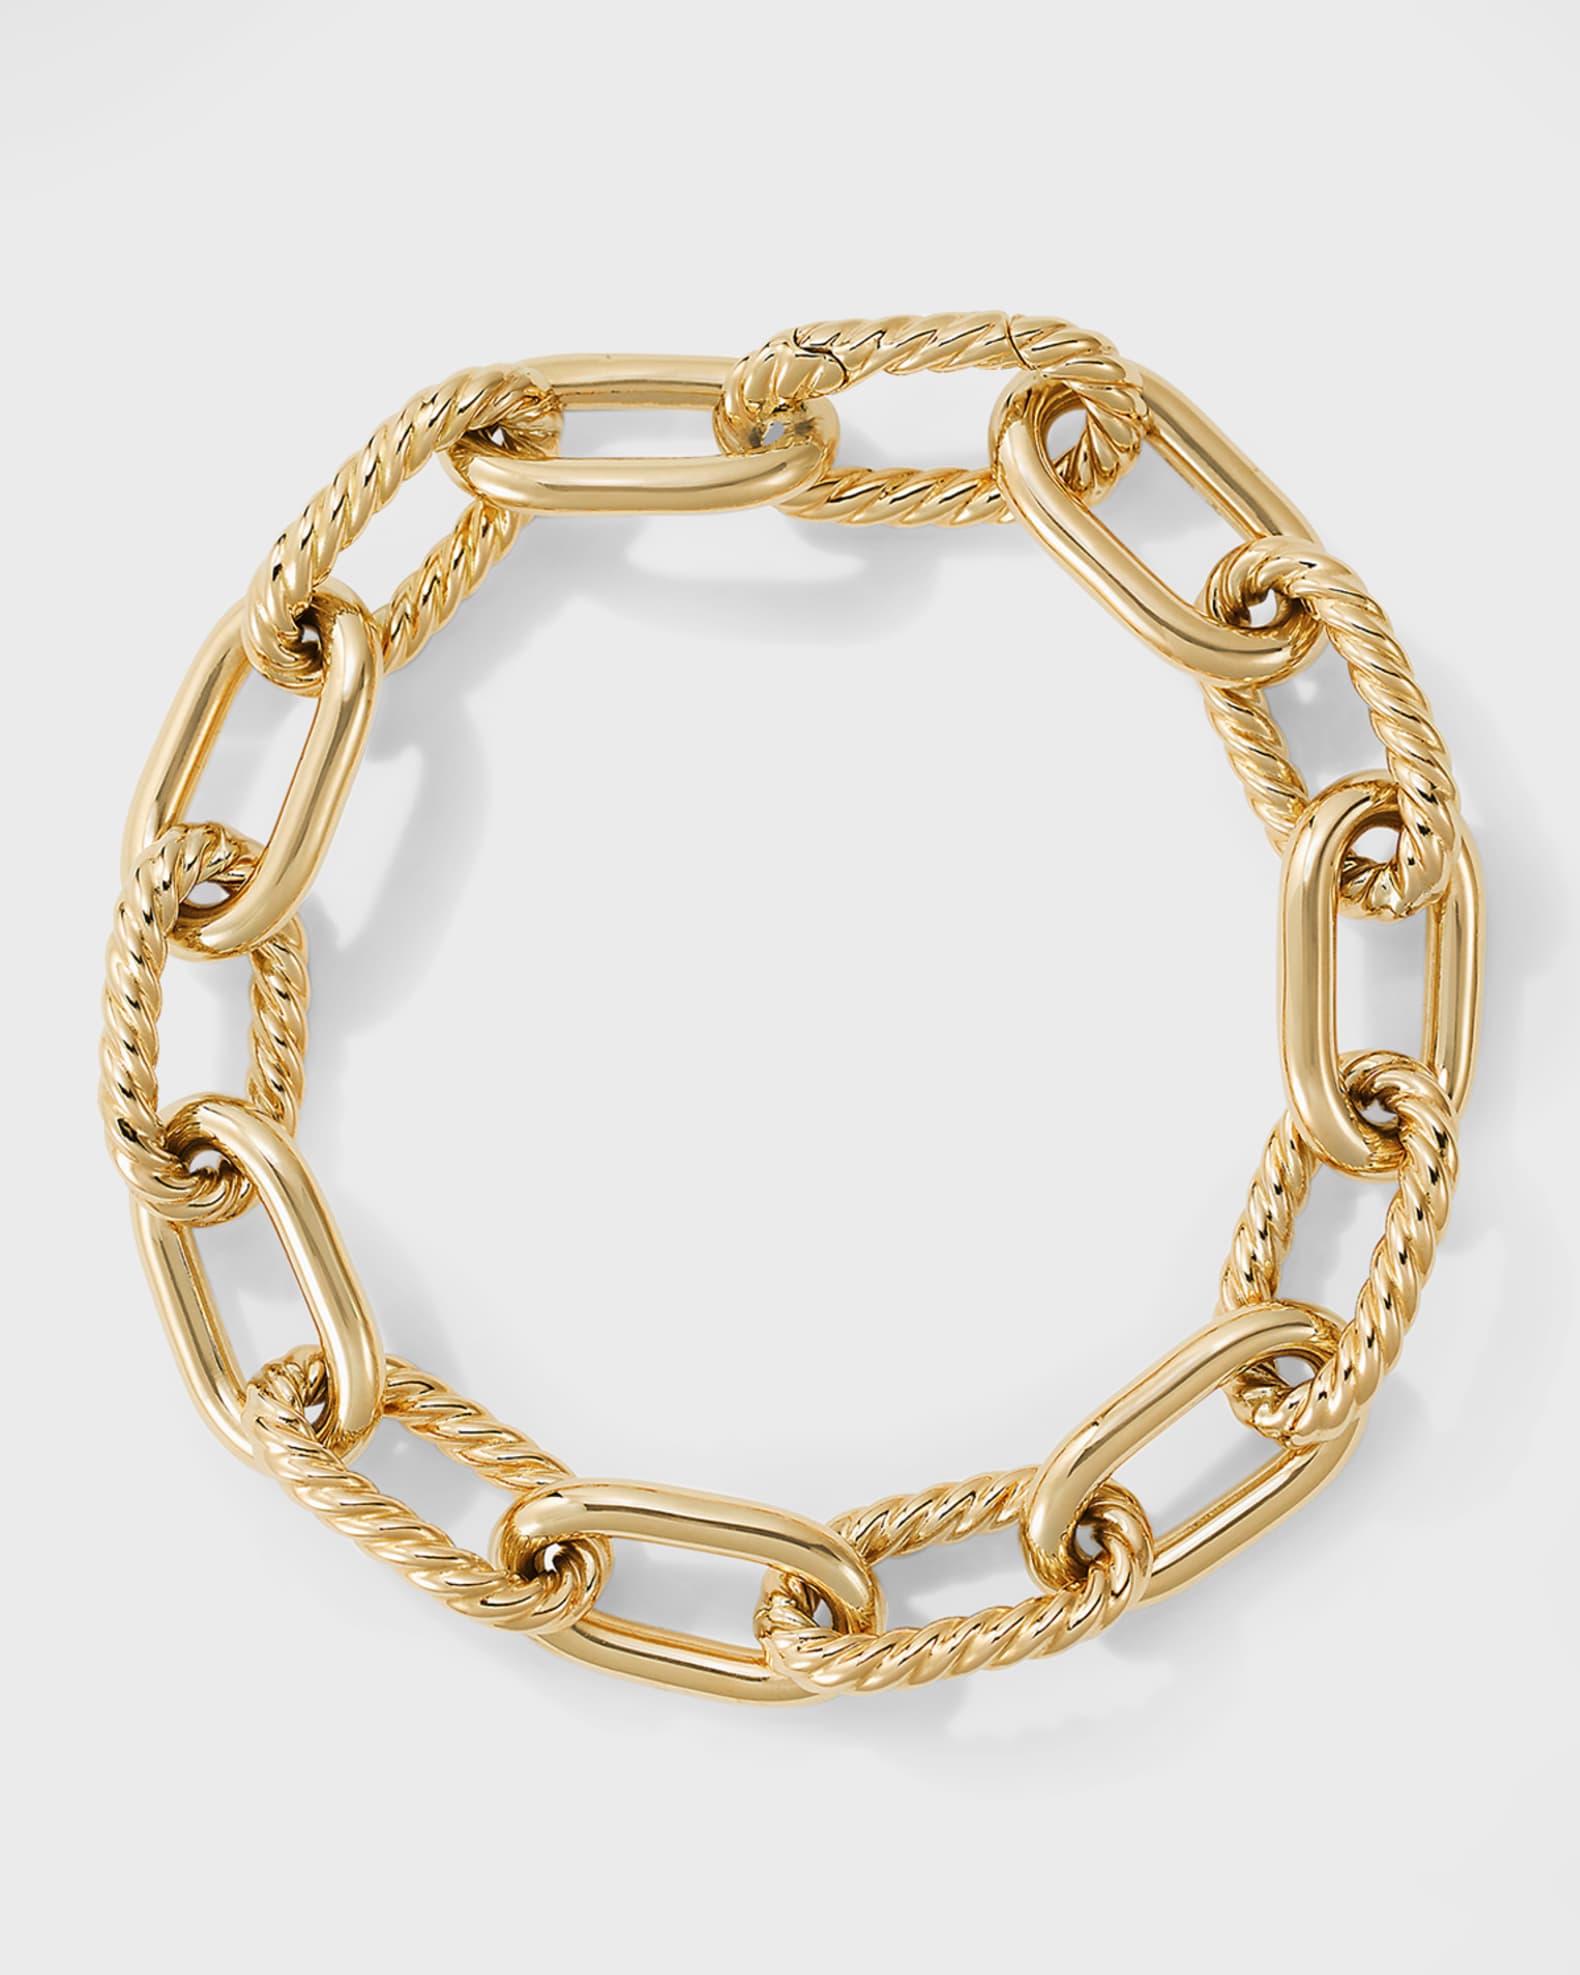 David Yurman DY Madison Chain Bracelet in 18K Gold, 11mm, Size M ...